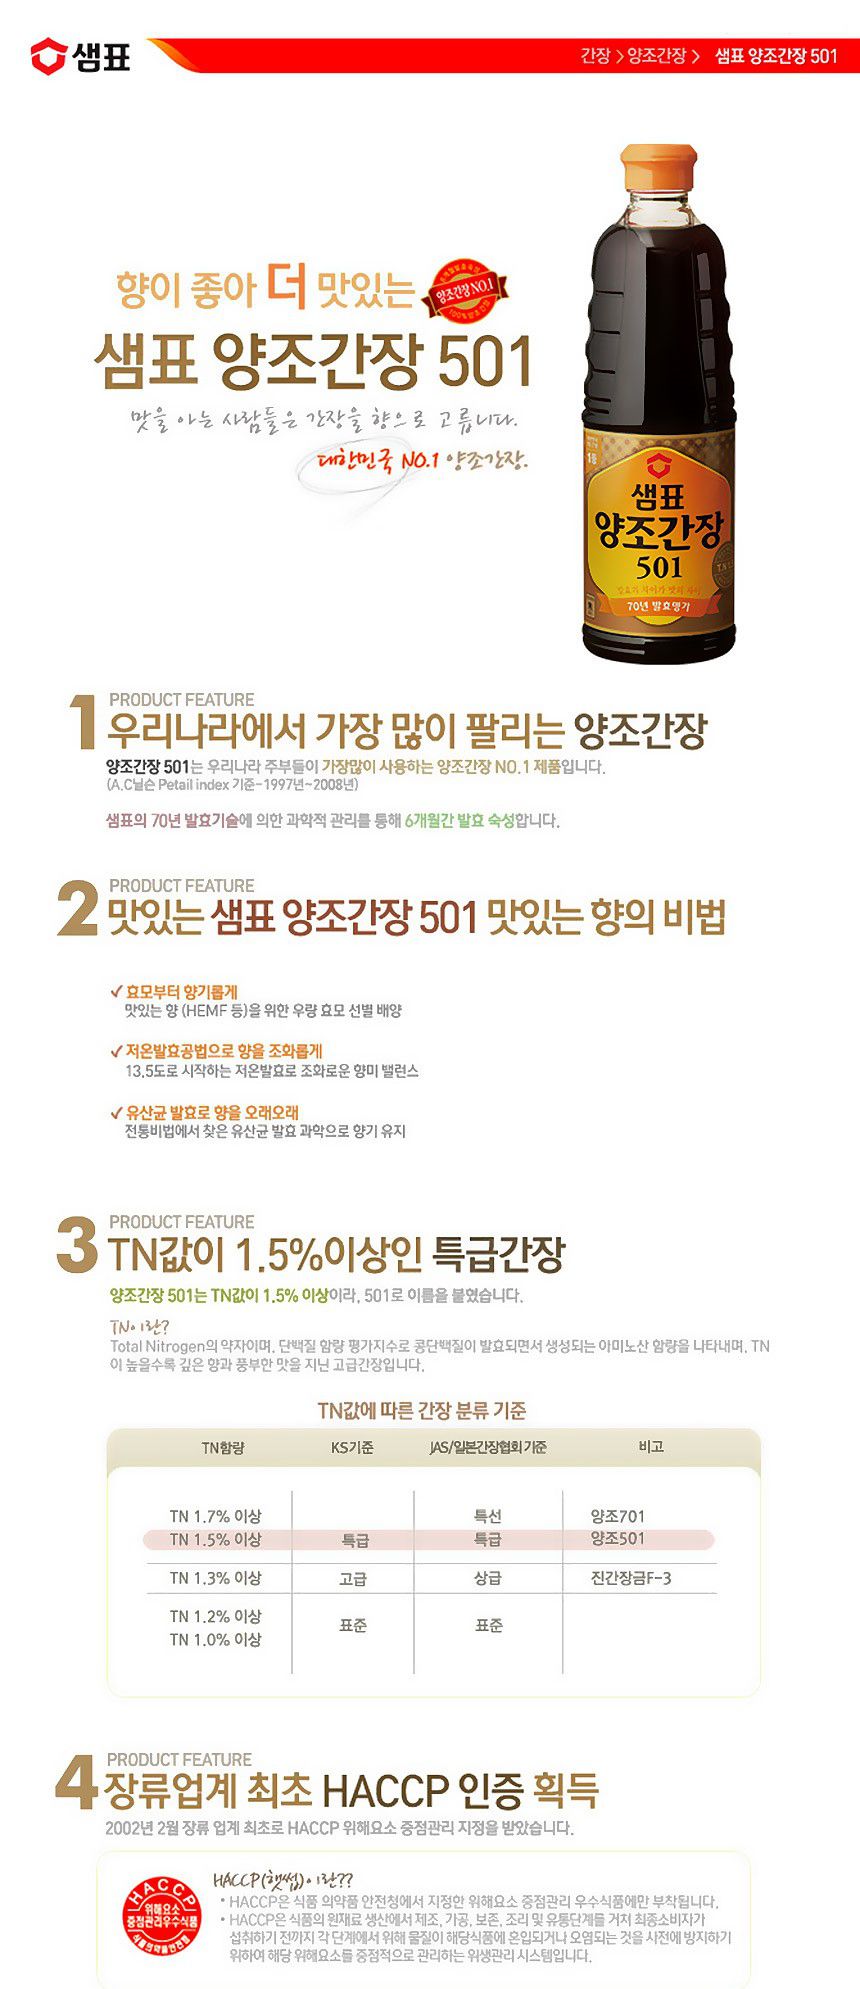 韓國食品-[Sempio] Soy Sauce 501 500ml